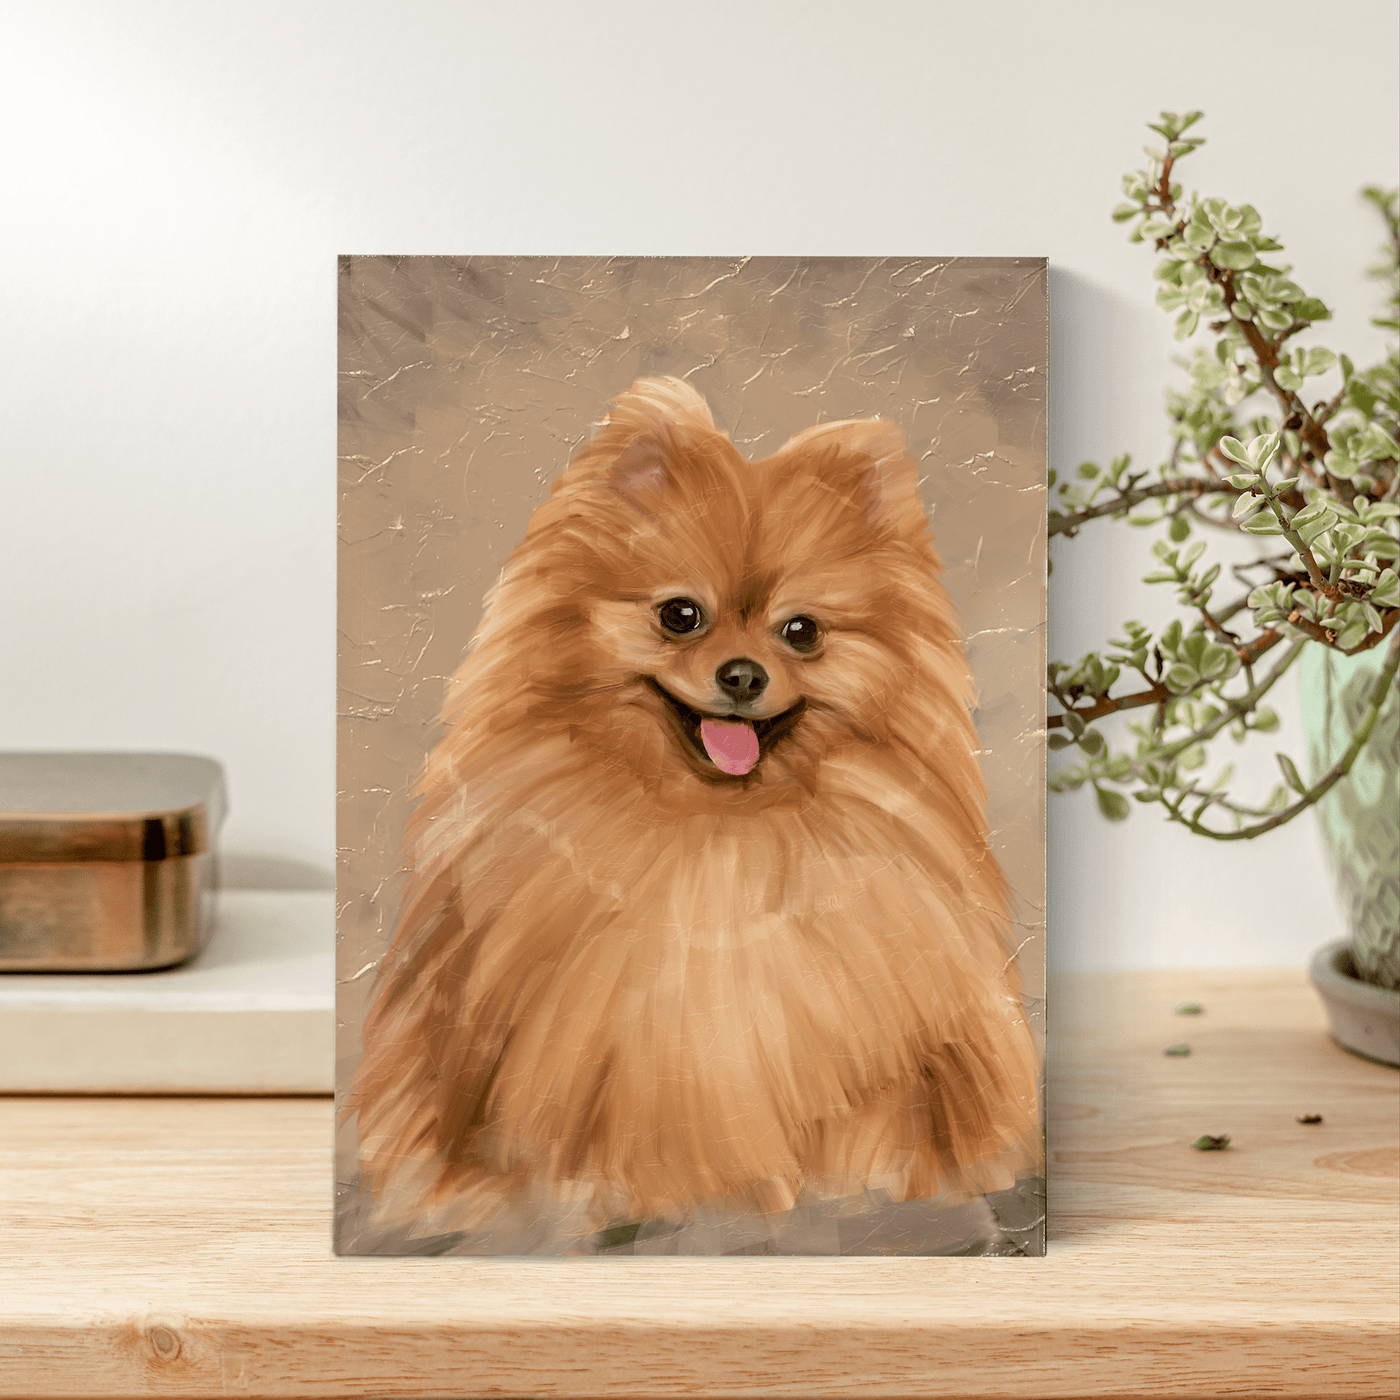 dog oil pastel of an adorable fur dog